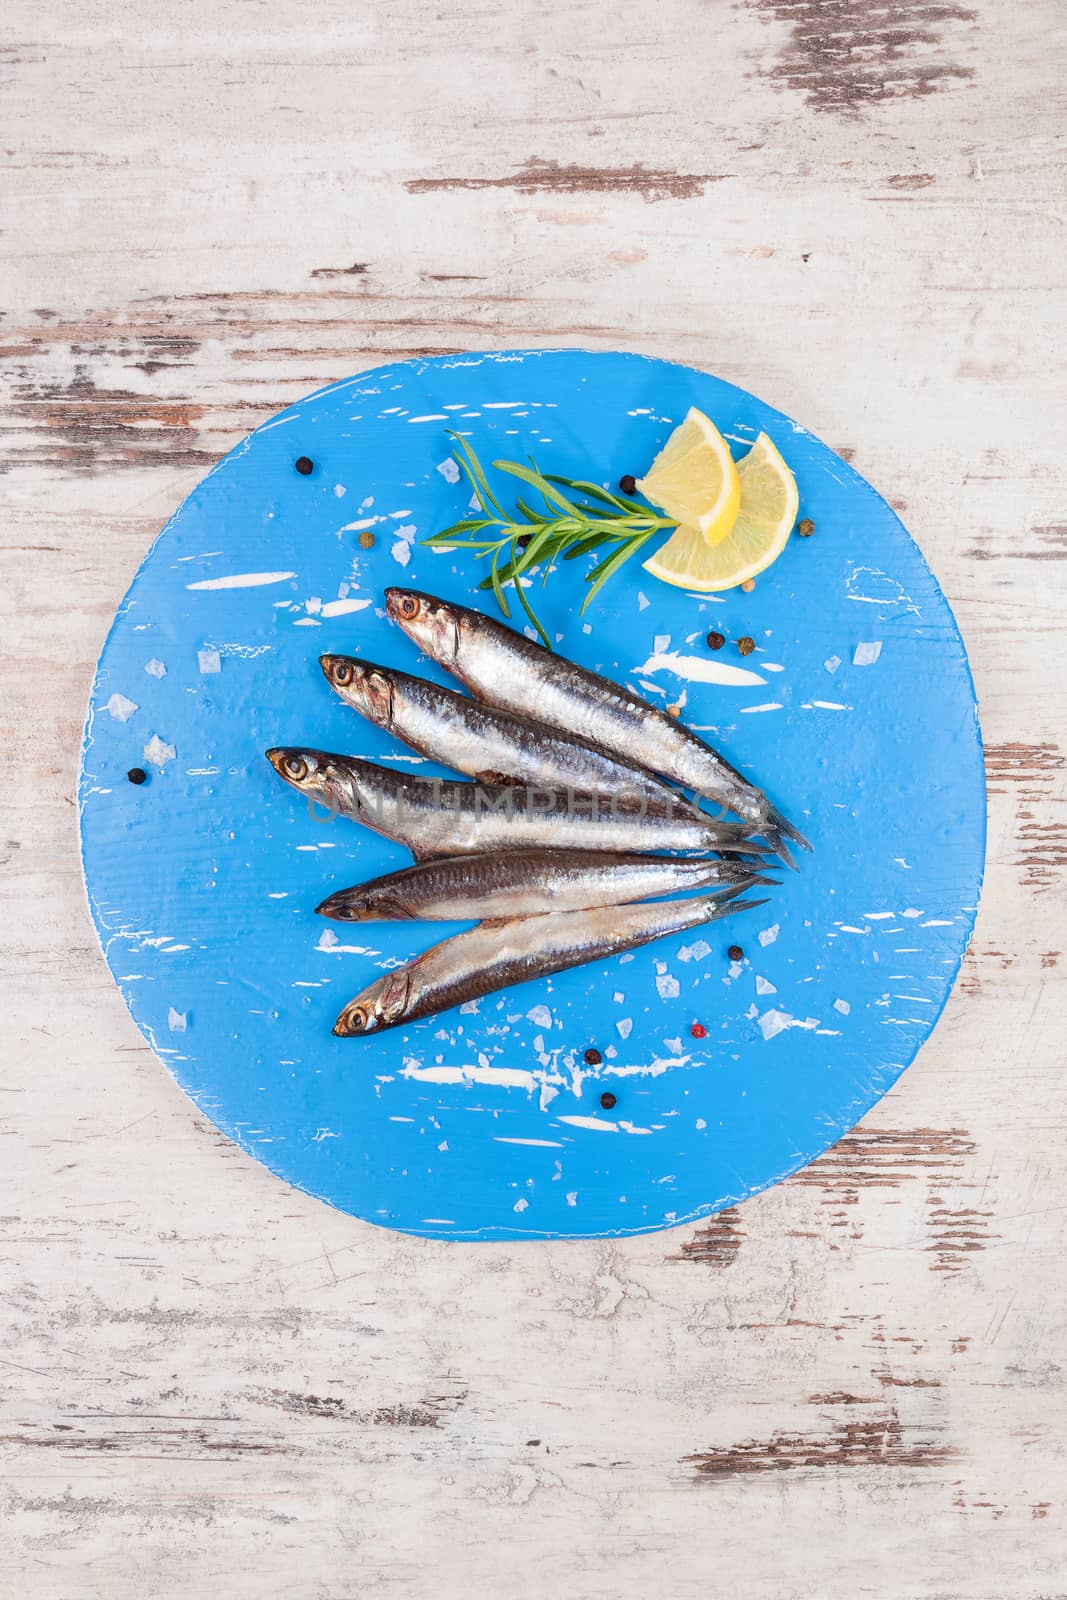 Several sardines on blue round kitchen board, on white wooden background, top view. Mediterranean seafood eating.